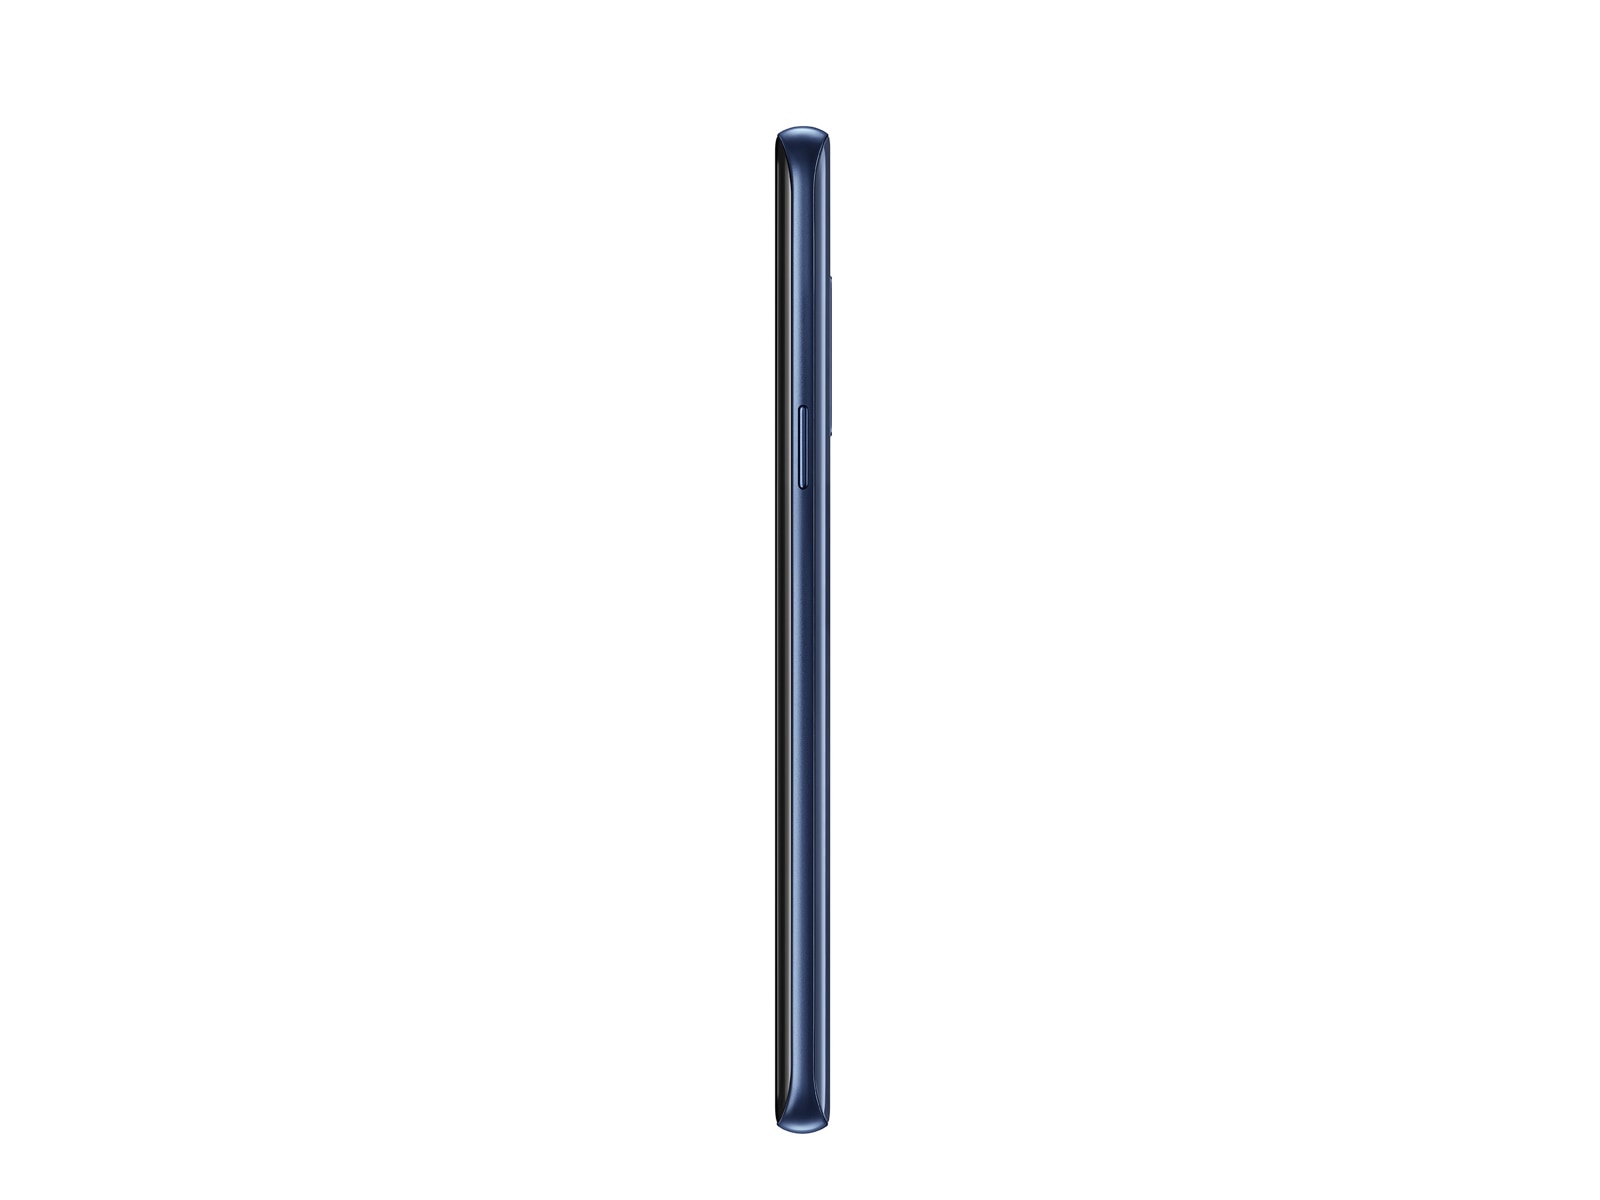 Thumbnail image of Galaxy S9 64GB (Verizon)